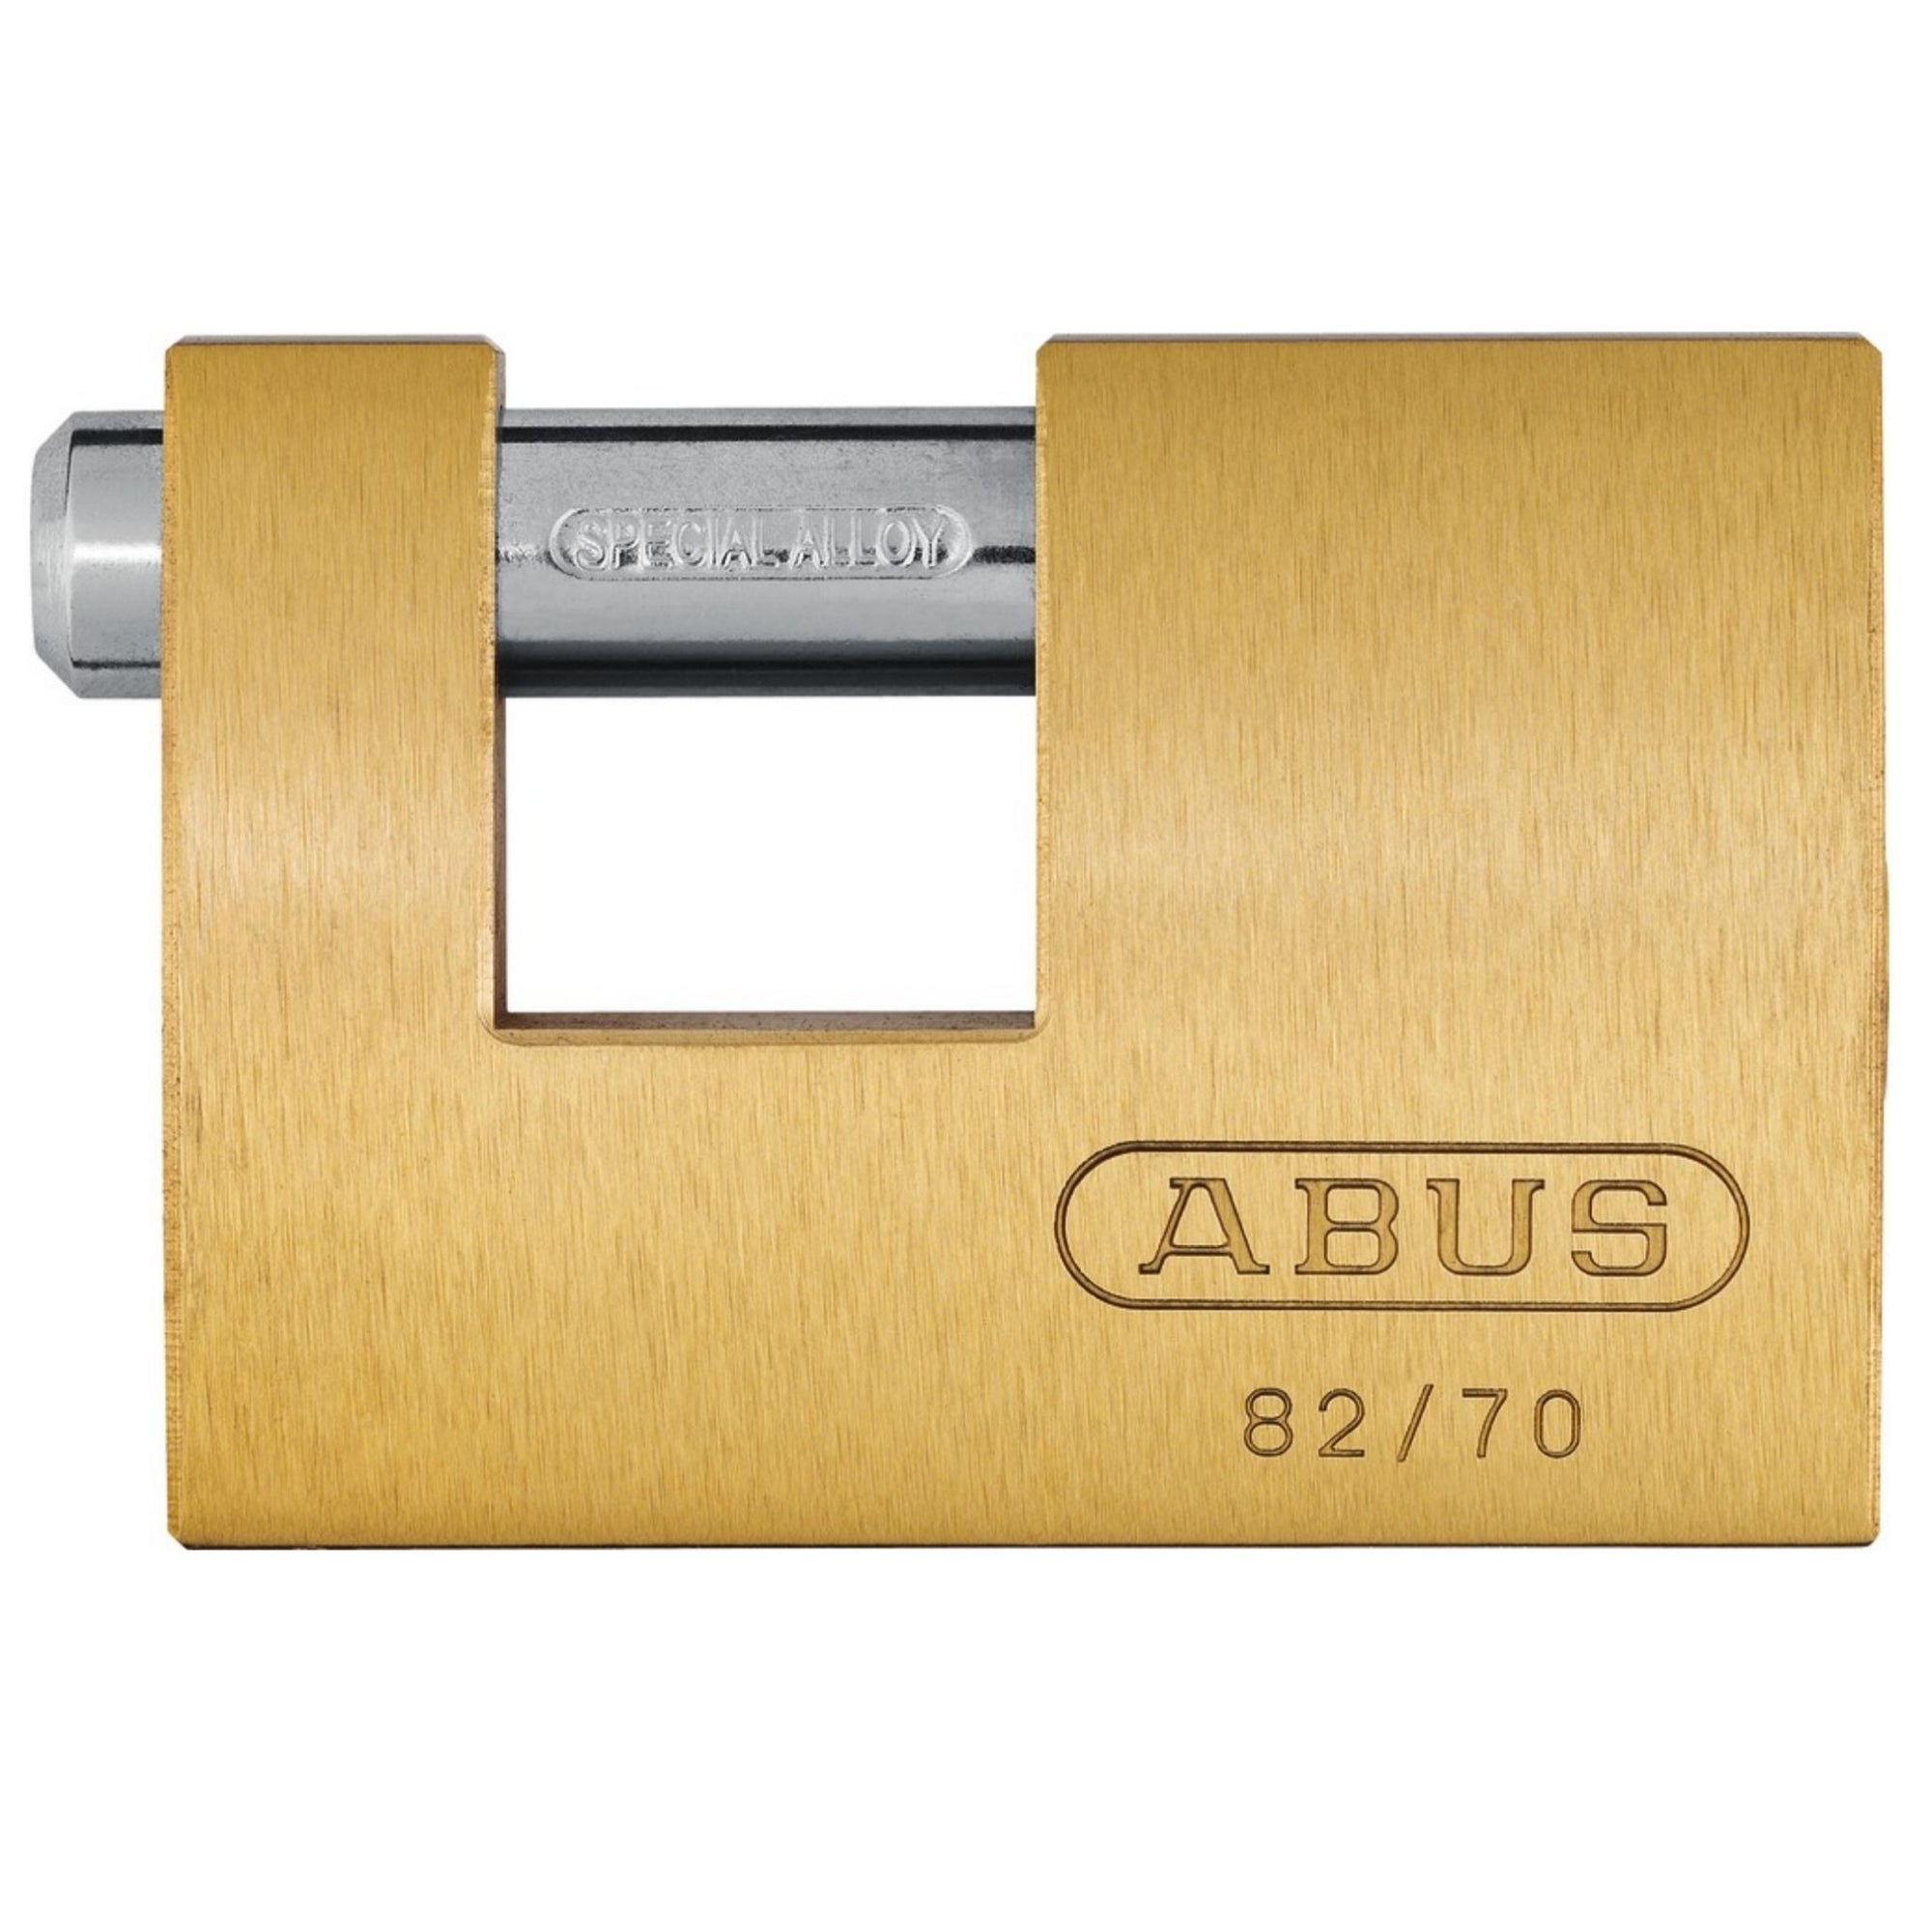 Abus 82/70 KA 8512 Monoblock Lock Keyed Alike Brass Mono Padlocks Match Existing Key# KA8512 - The Lock Source